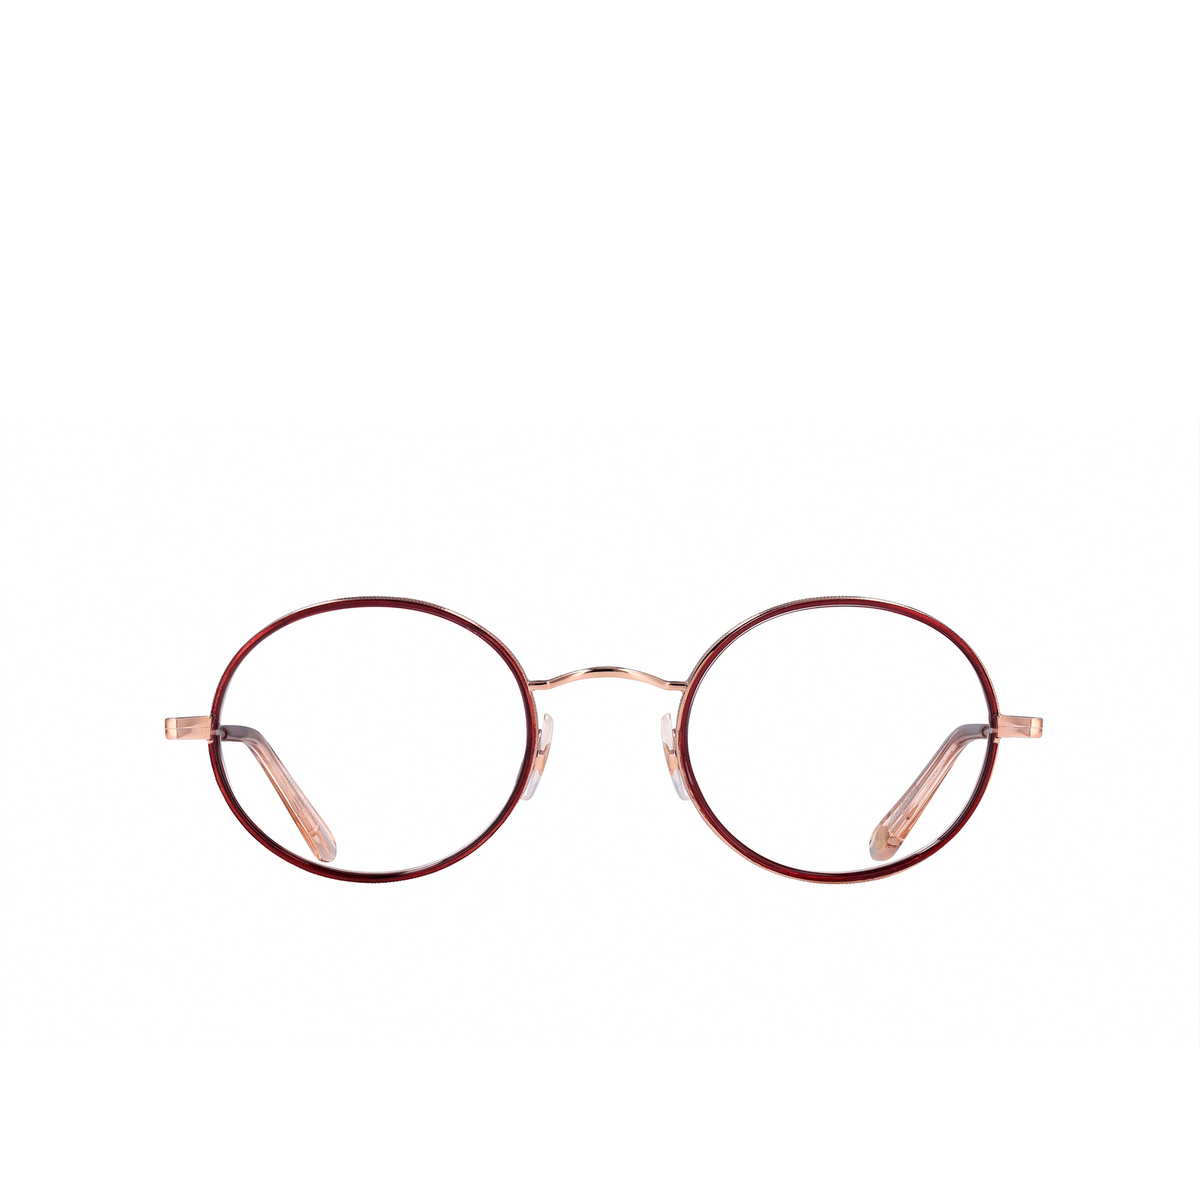 Garrett Leight LINDEN Eyeglasses BGY-RG-NU Burgundy-Rose Gold-Nude - front view